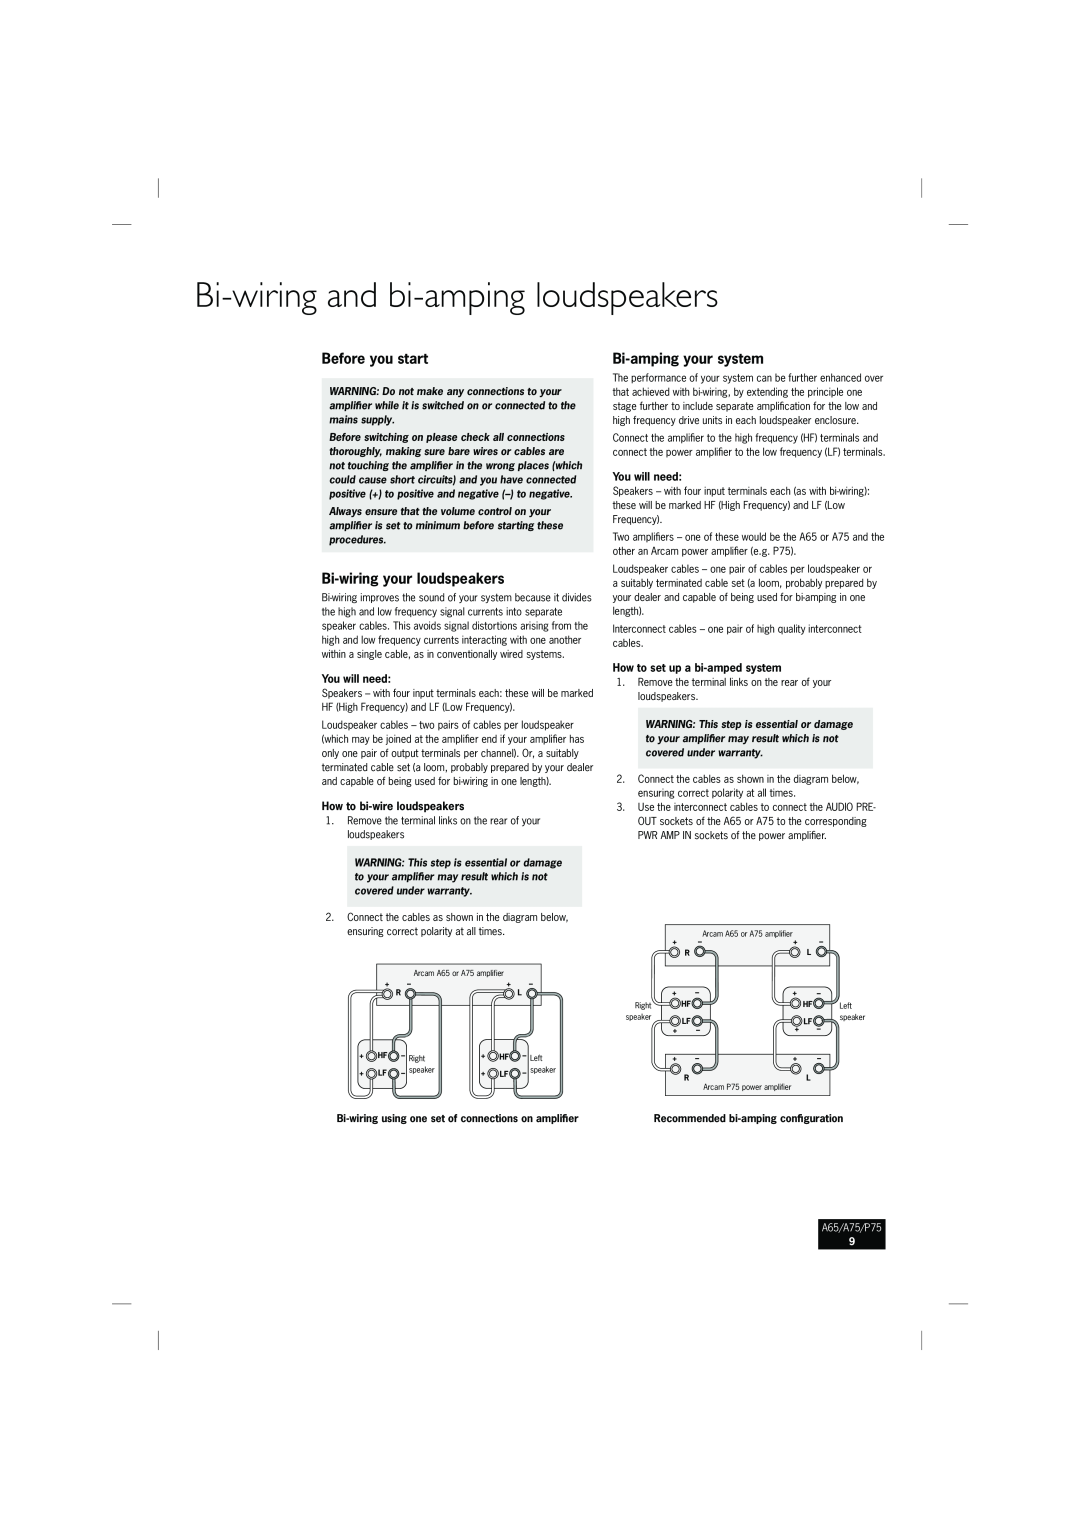 Arcam P75, A65, A75 Bi-wiringand bi-ampingloudspeakers, Before you start, Bi-wiringyour loudspeakers, Bi-ampingyour system 